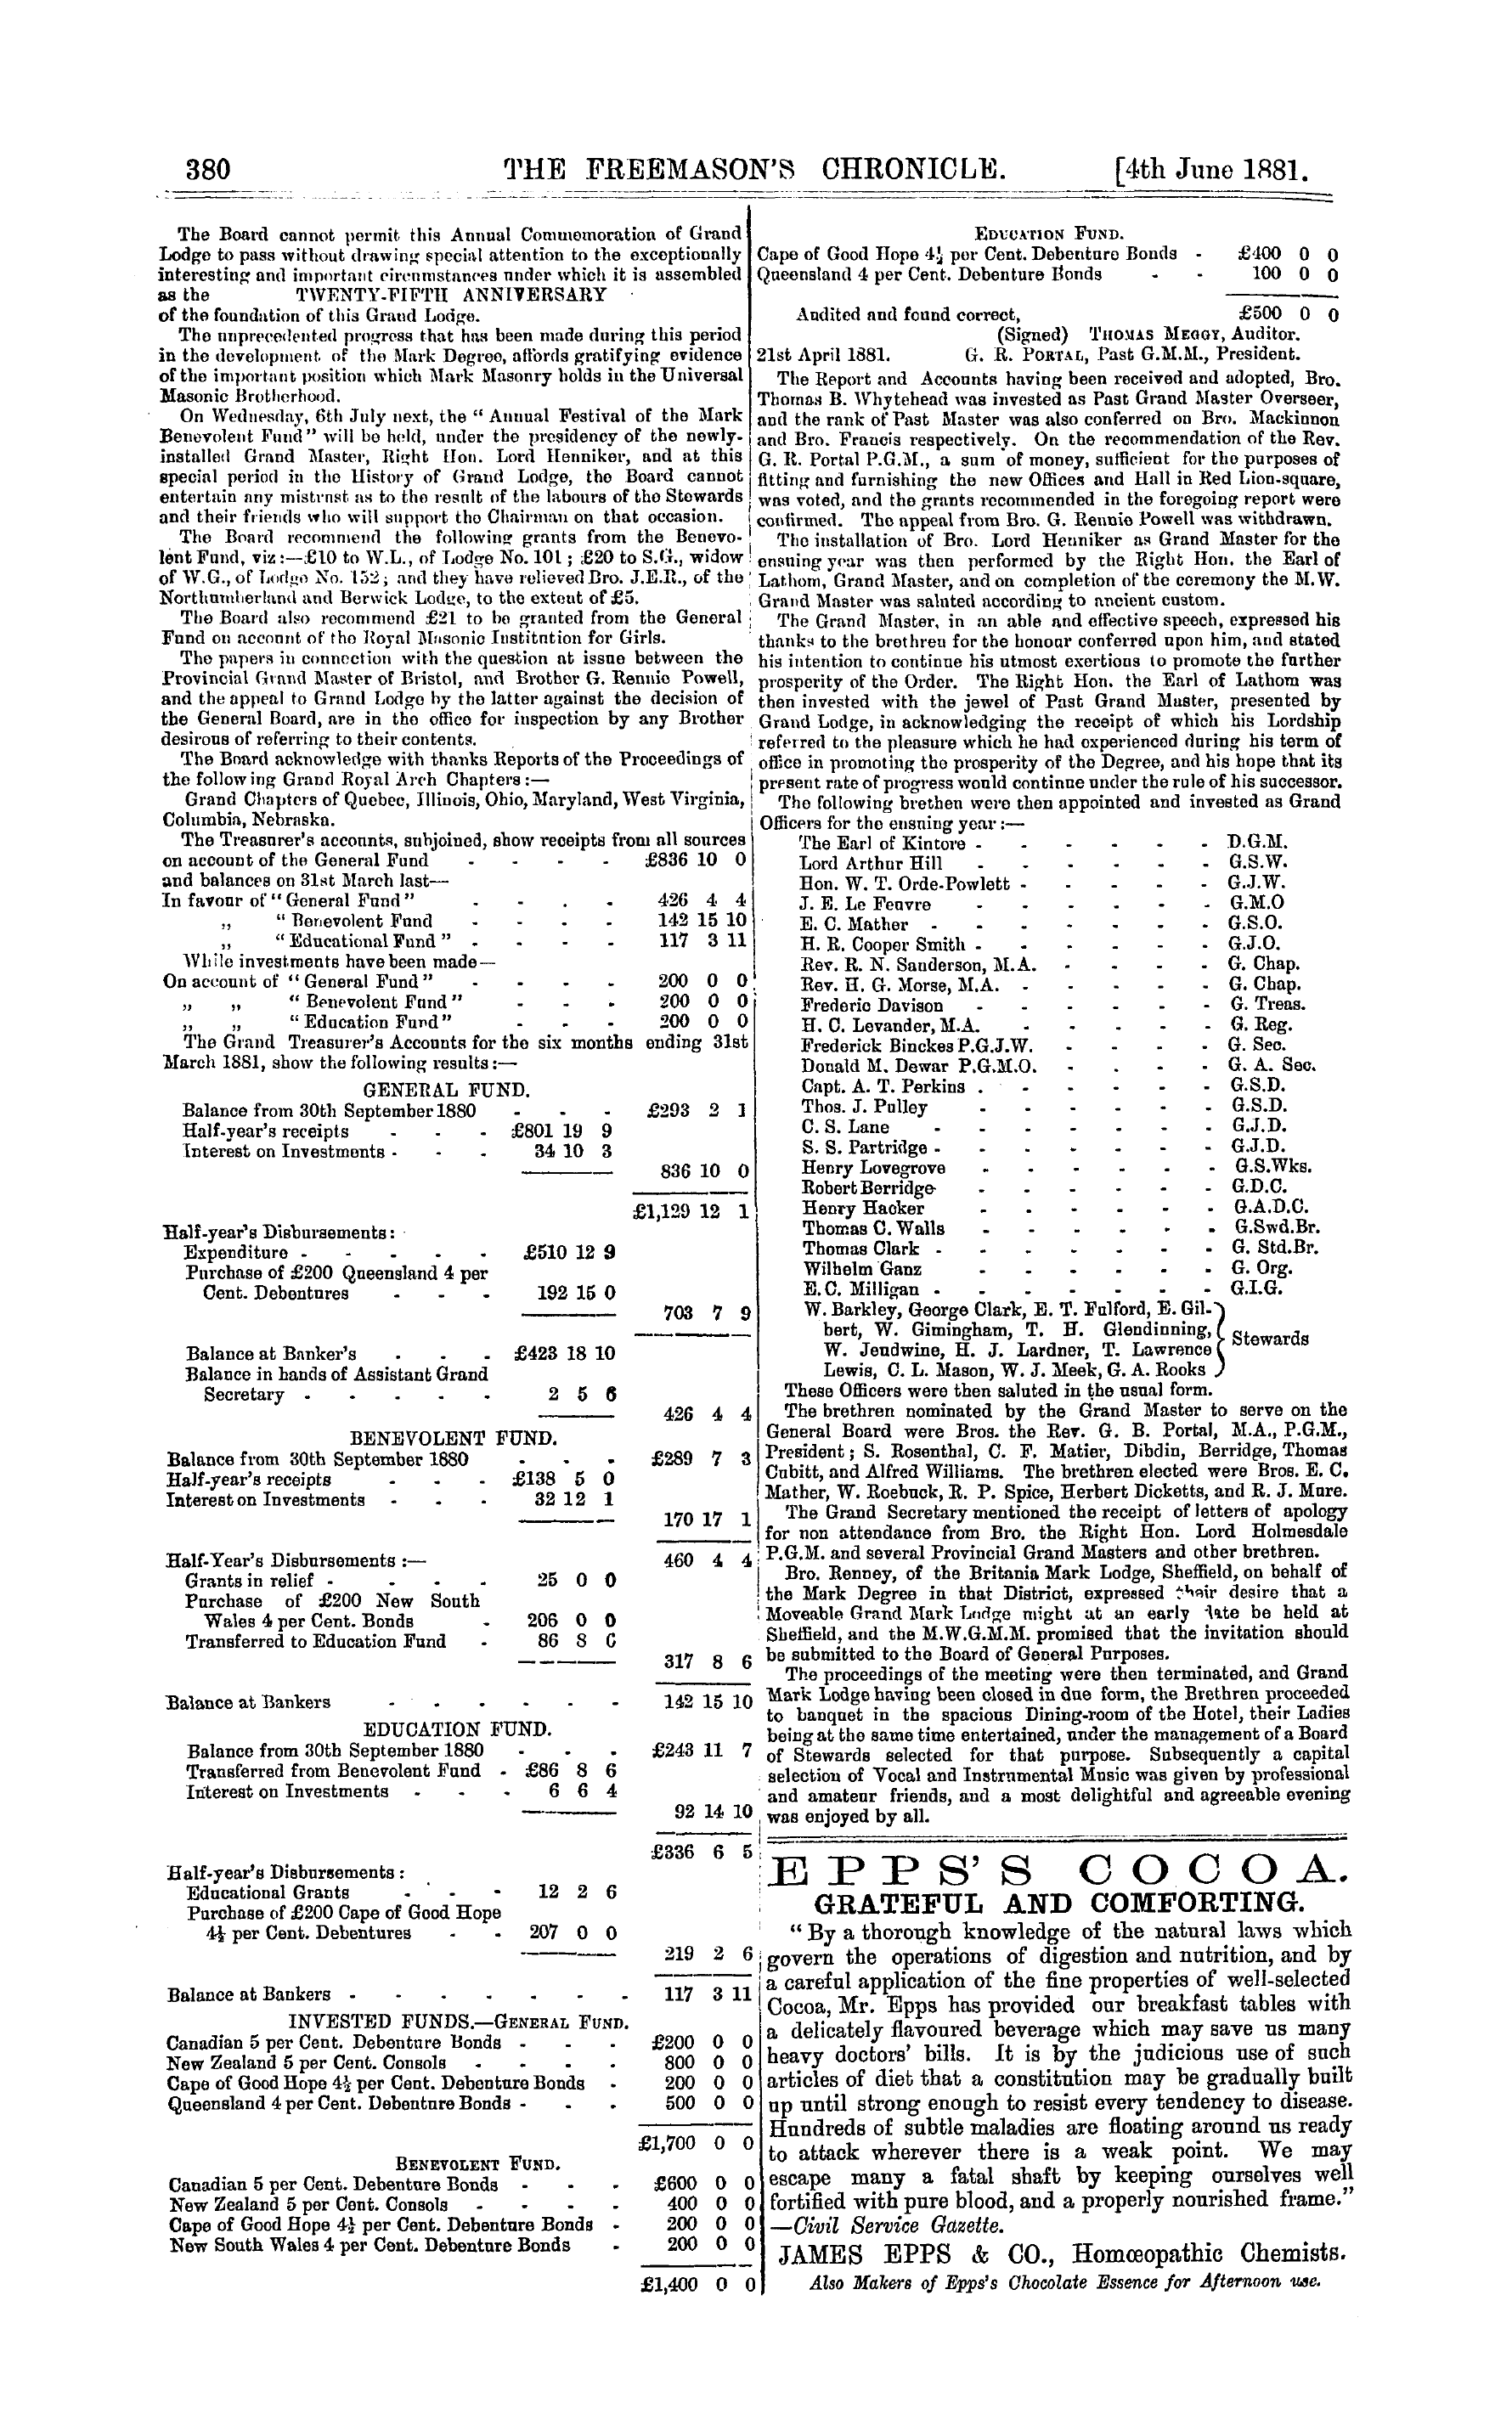 The Freemason's Chronicle: 1881-06-04: 12